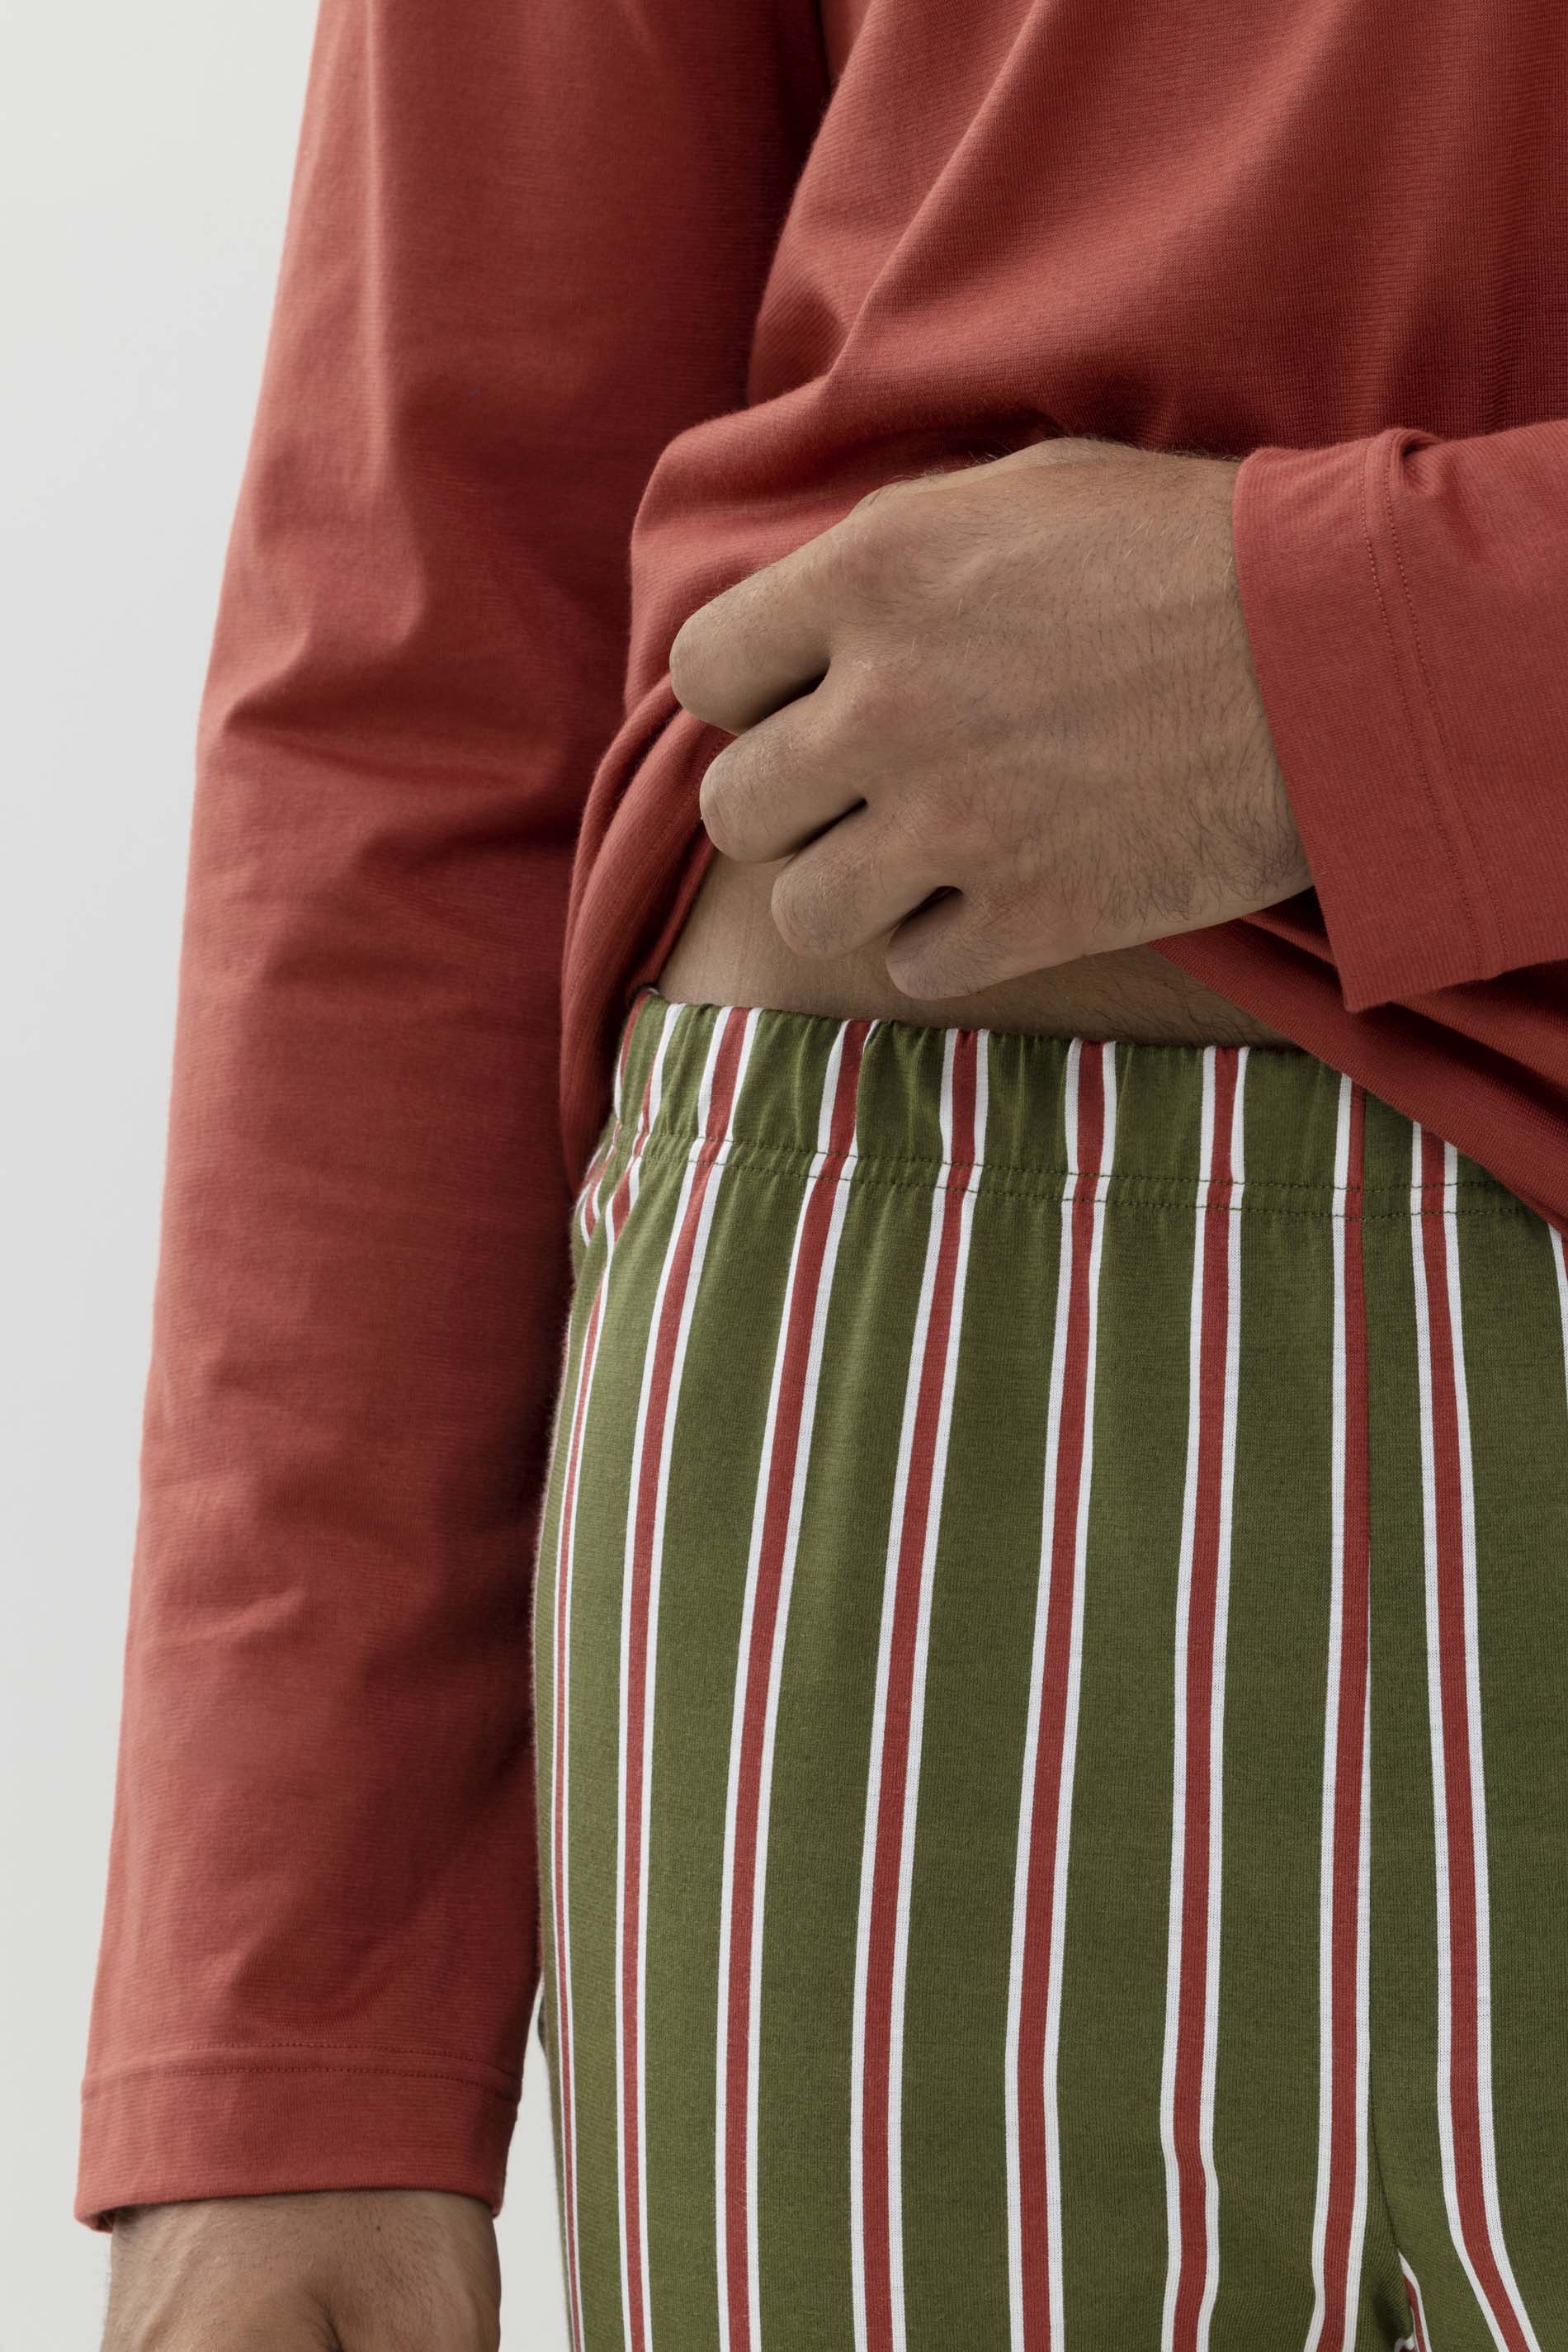 Pyjamas Serie Stripes Detail View 02 | mey®